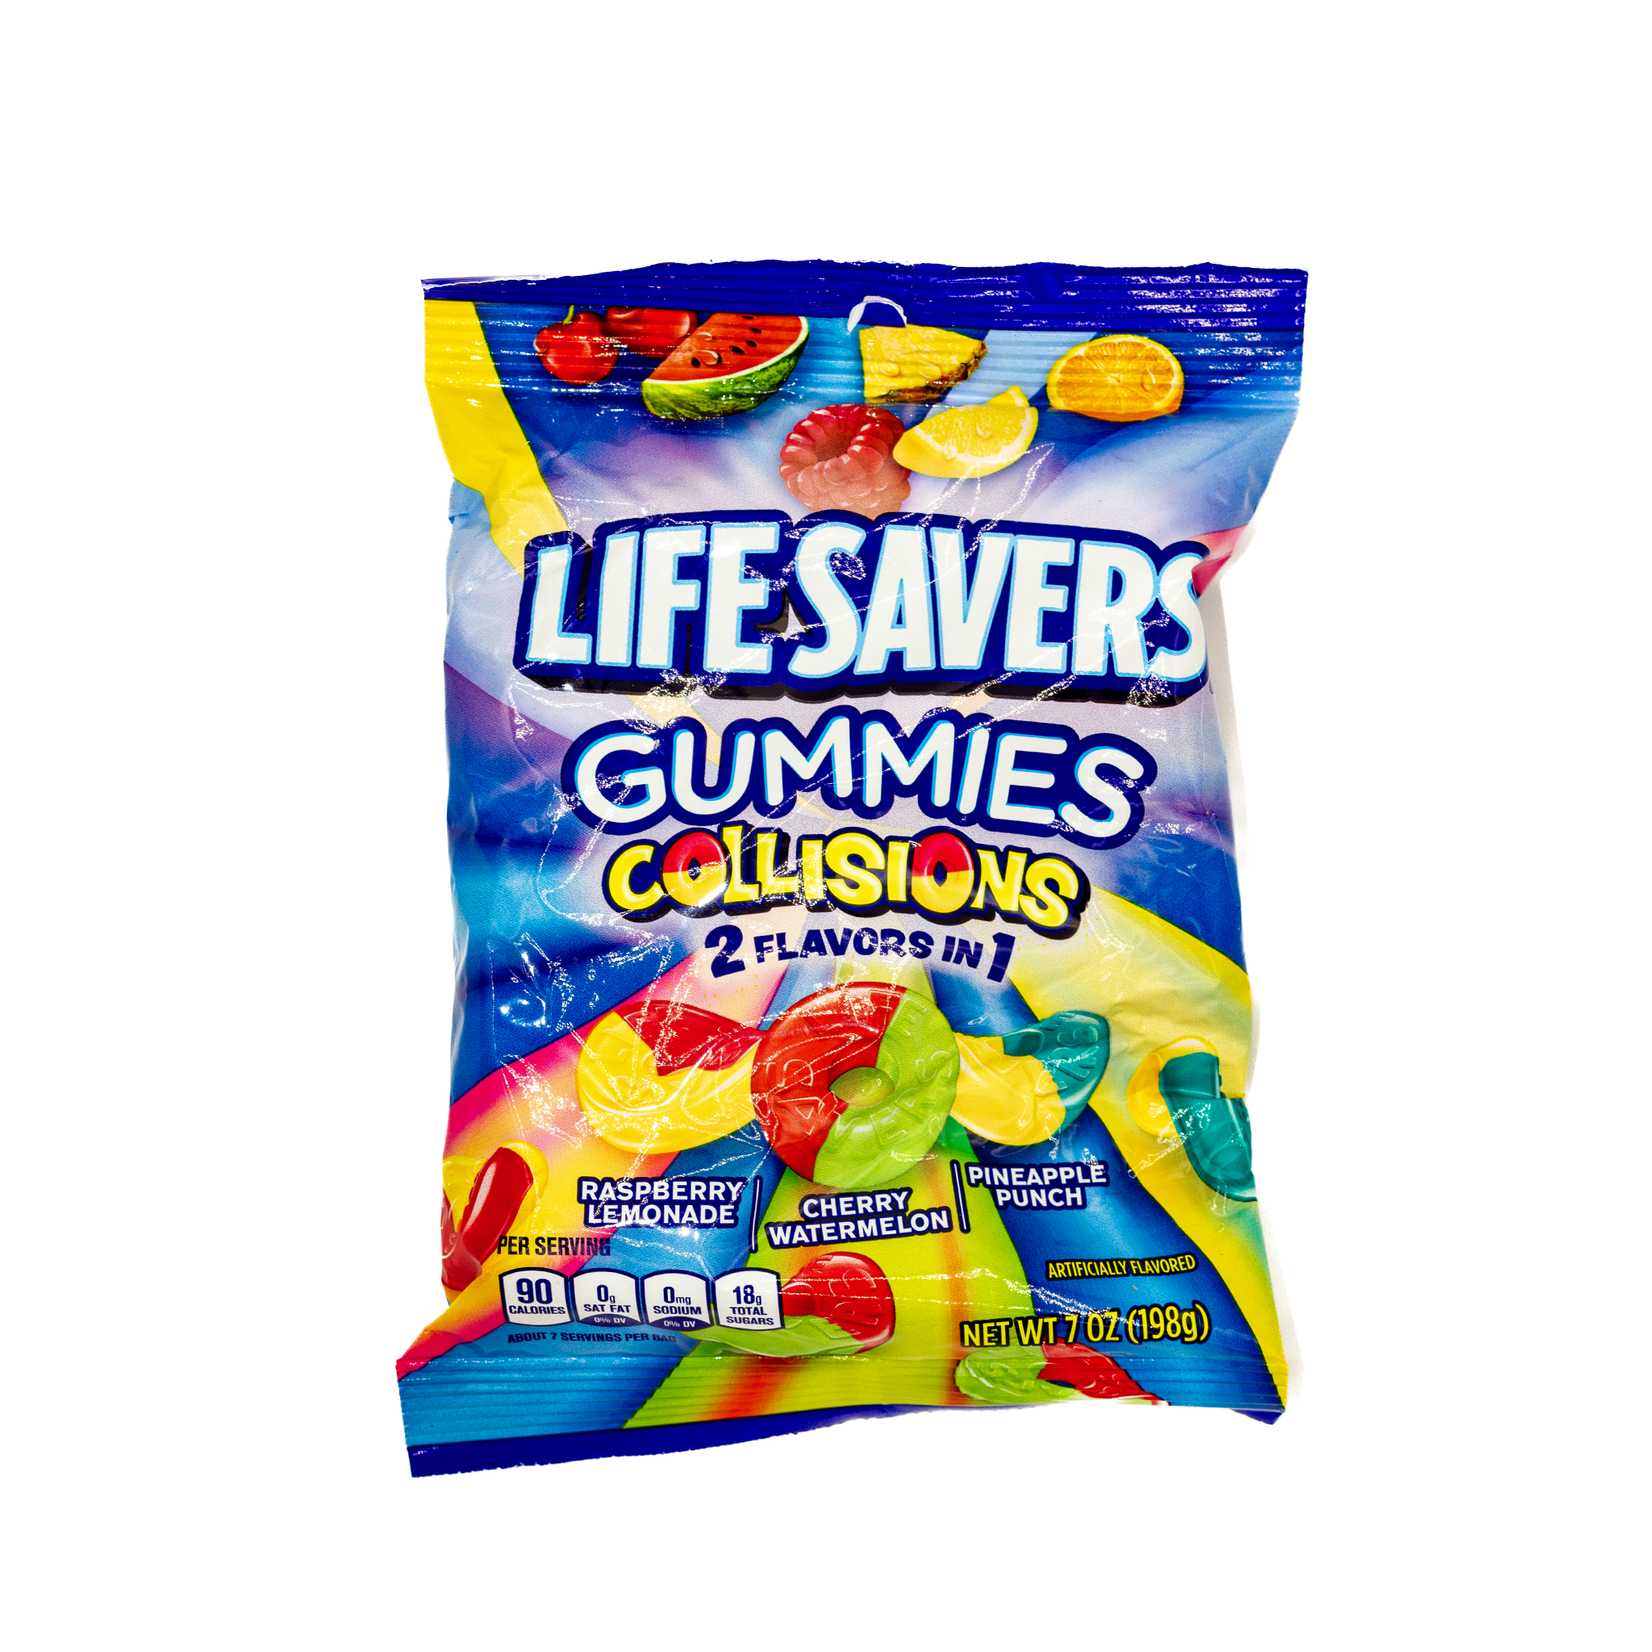 Life Savers Lifesavers gummies collisions 198g